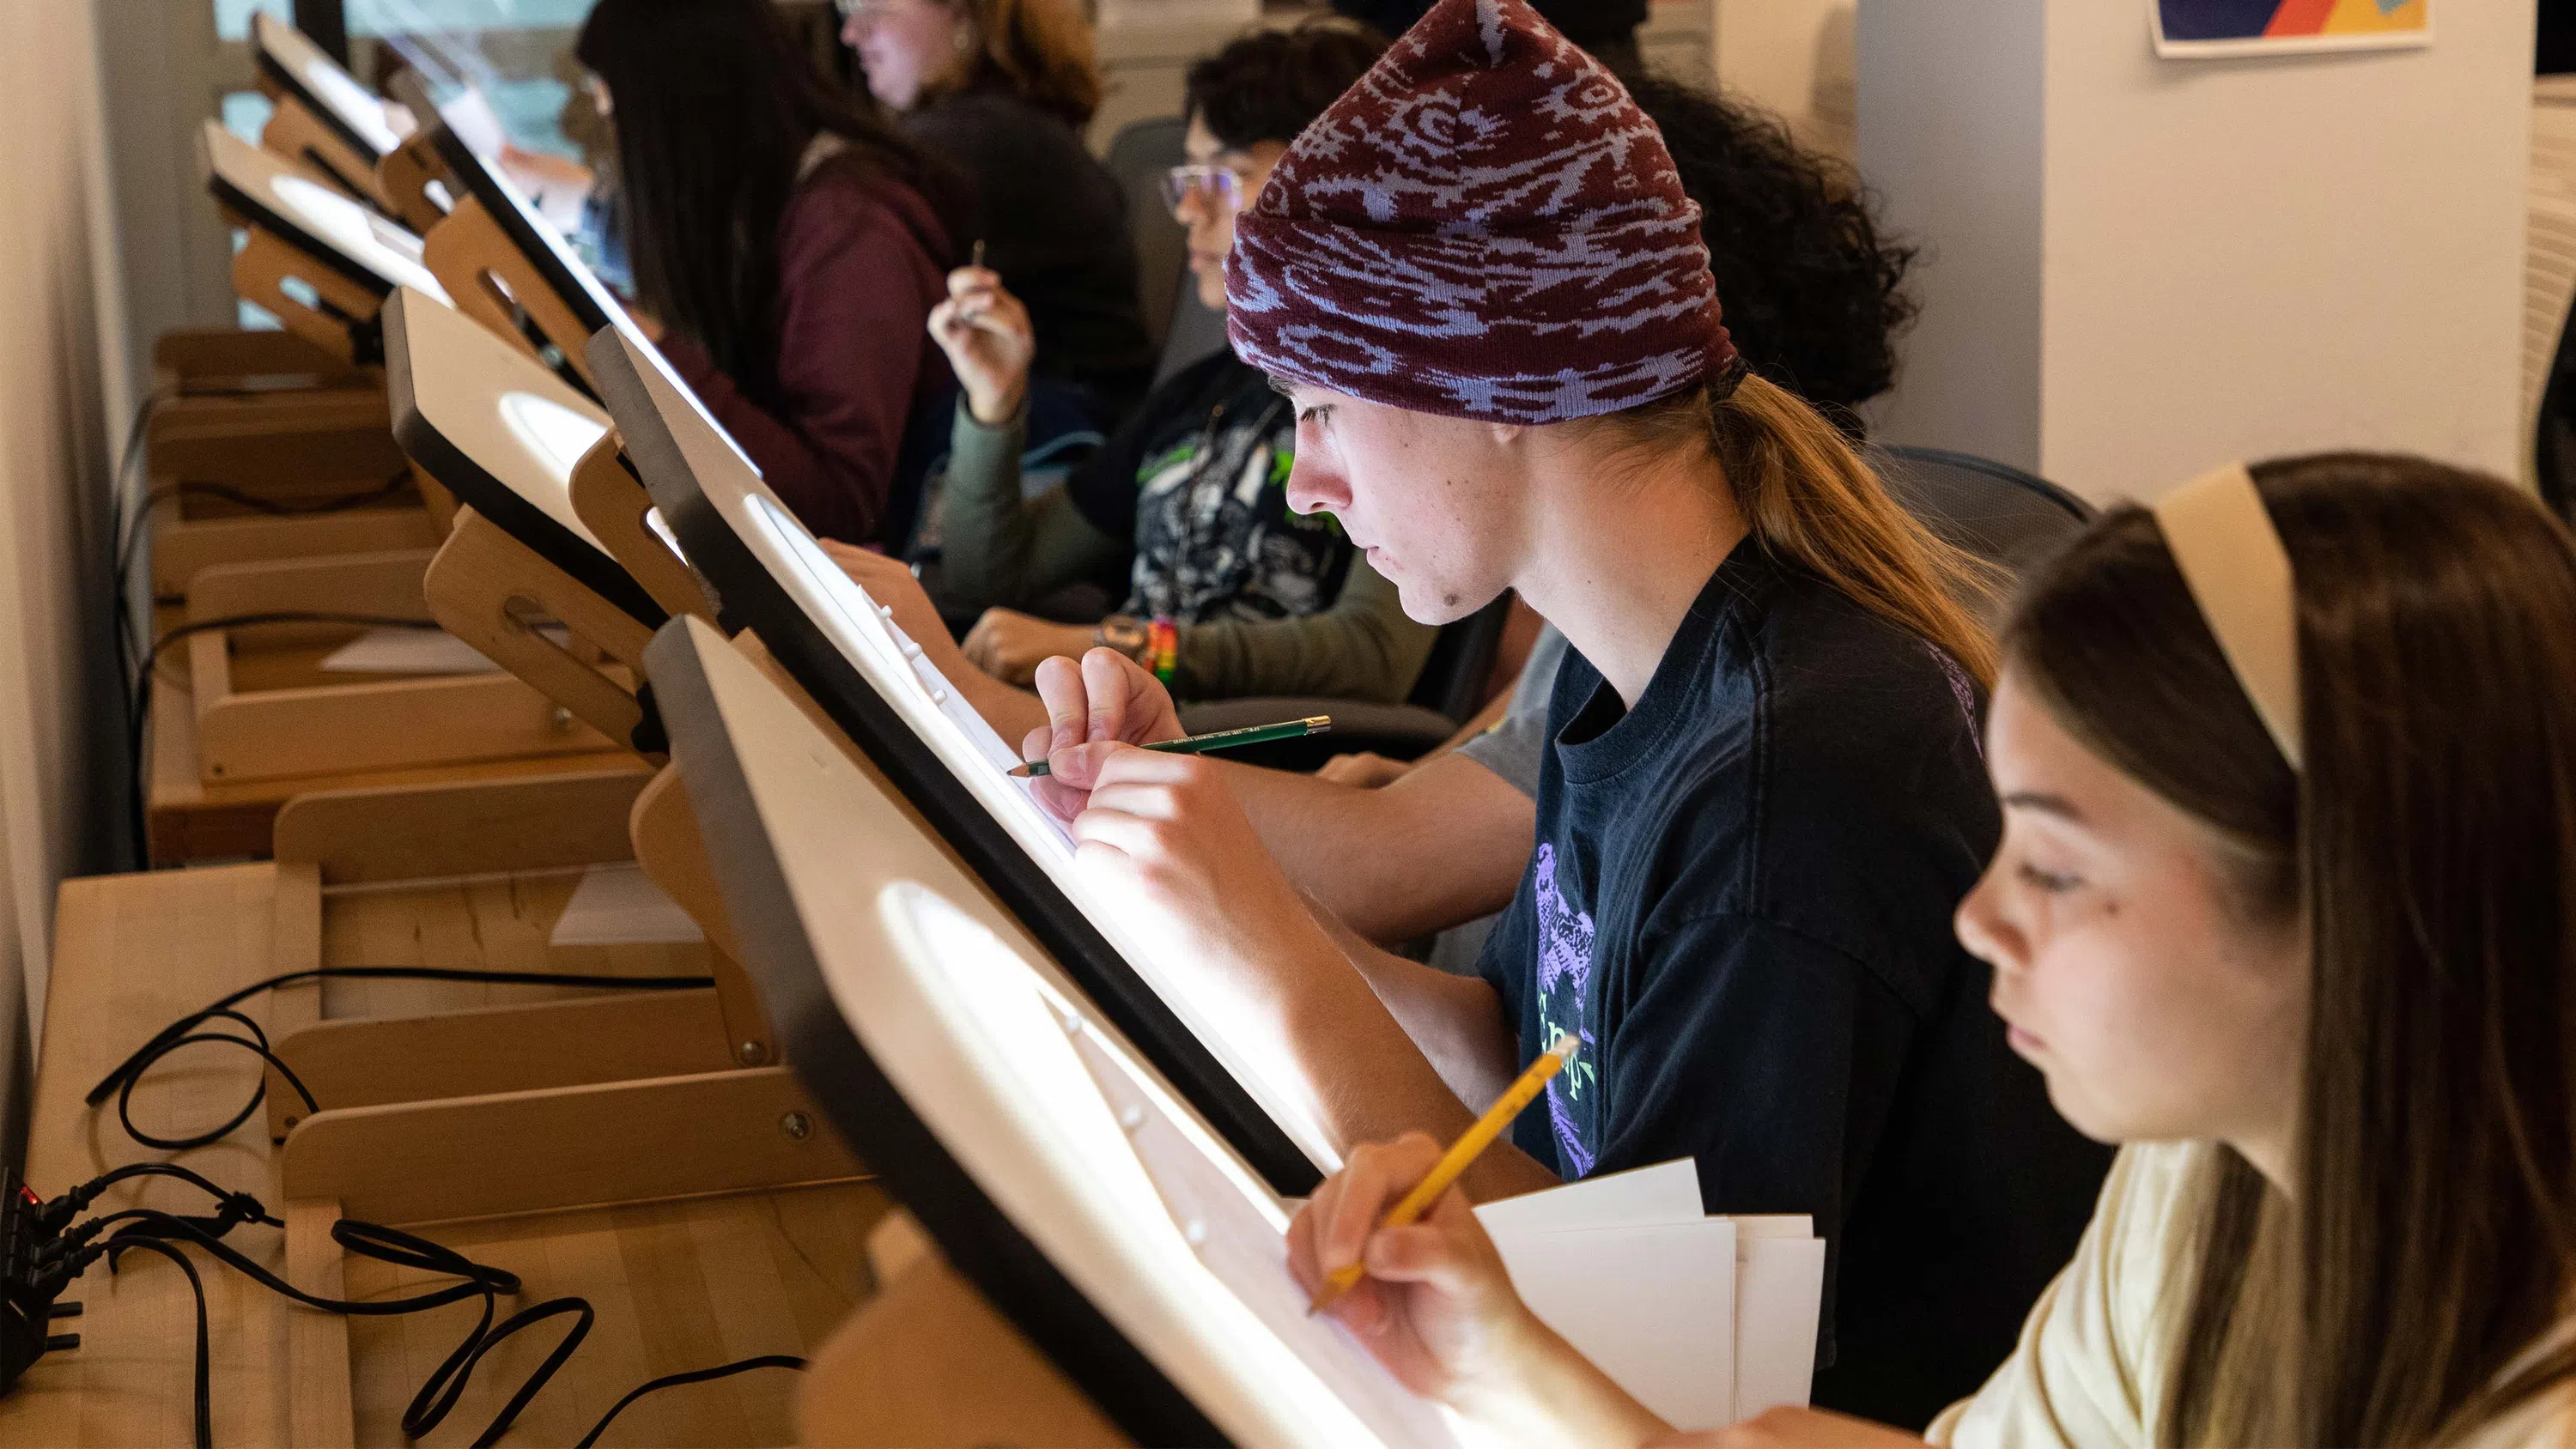 Students draw on lighttables